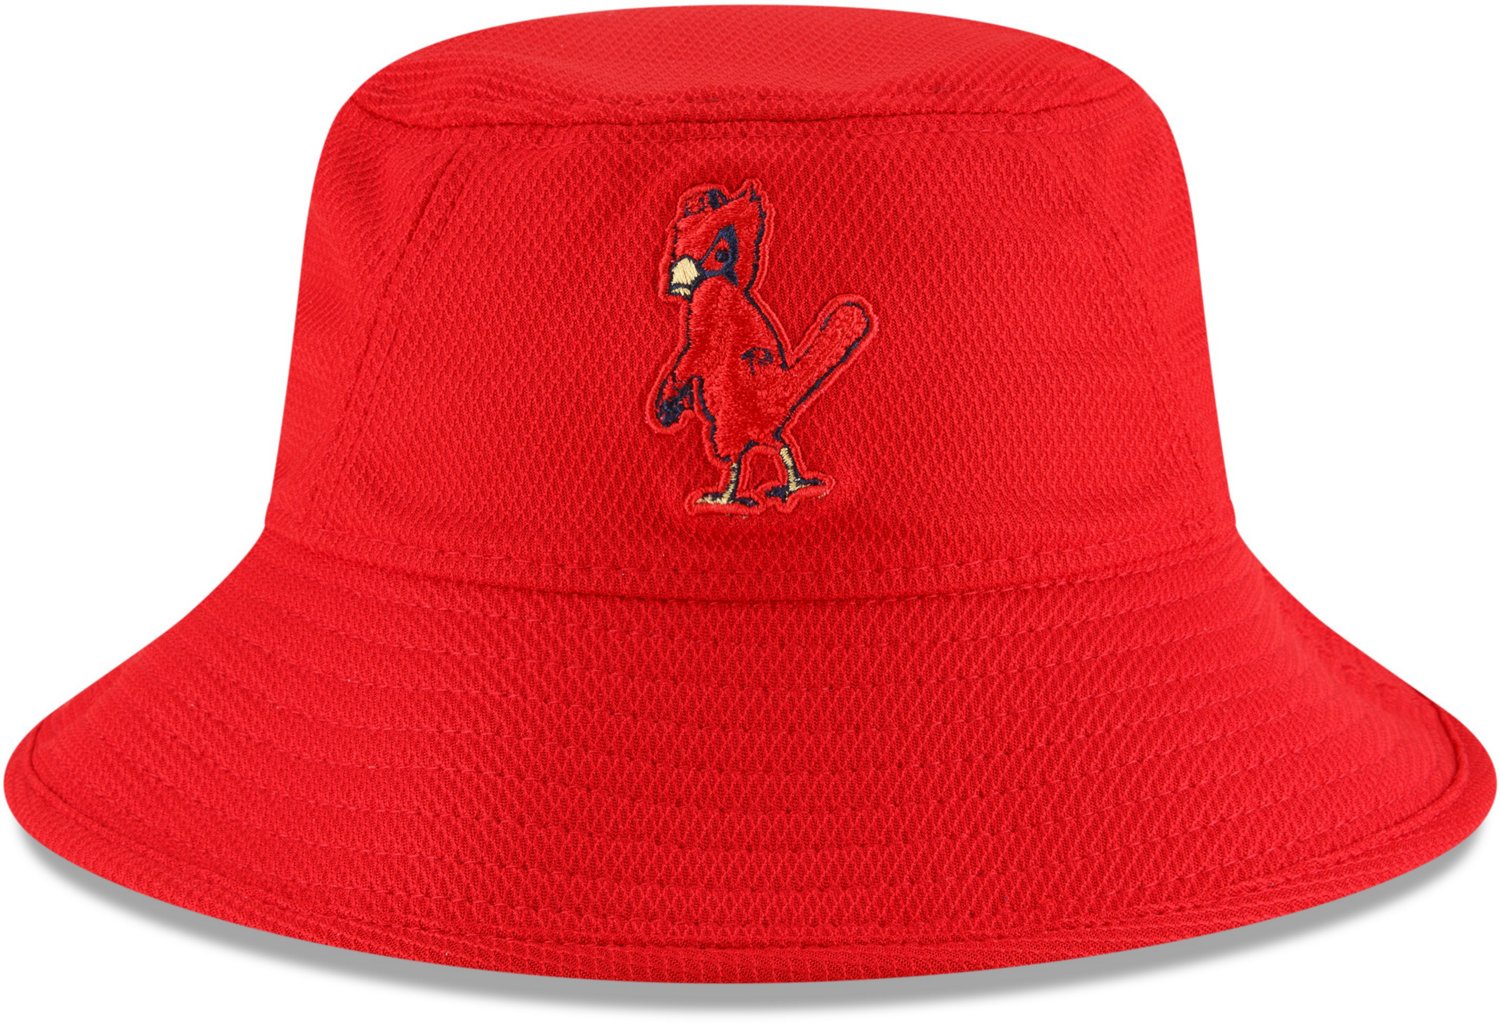 New Era St. Louis Cardinals Batting Practice OTC Bucket Hat